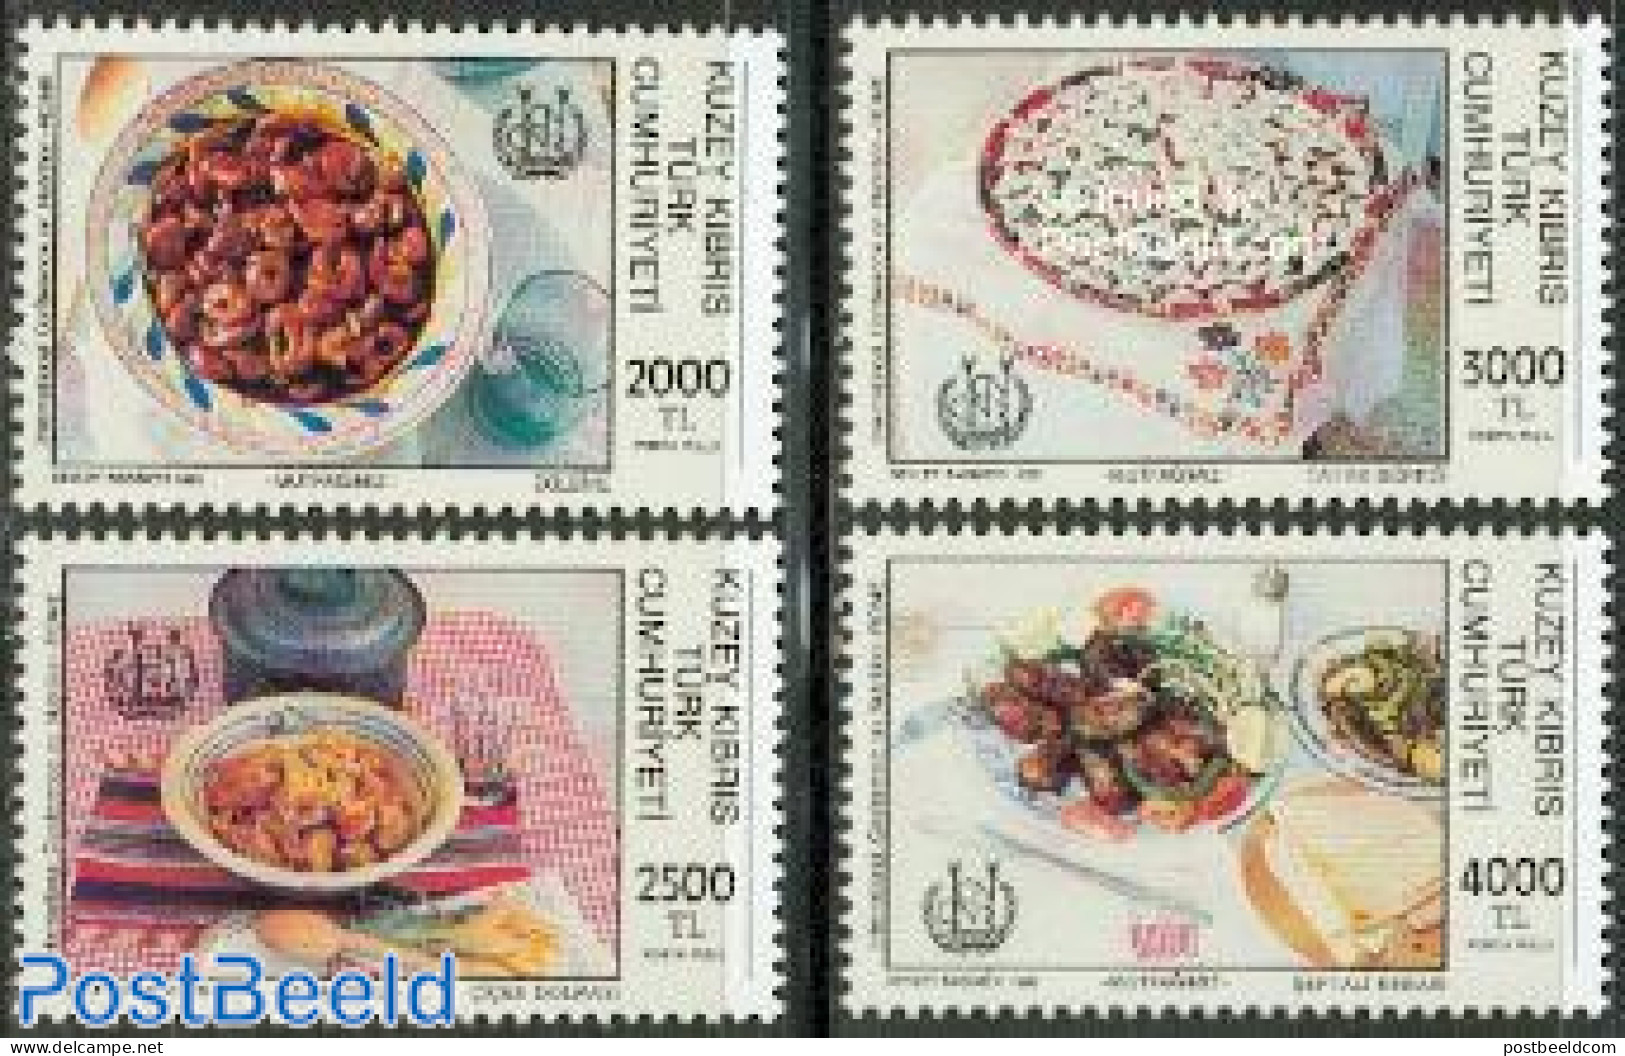 Turkish Cyprus 1992 Food 4v, Mint NH, Health - Food & Drink - Food